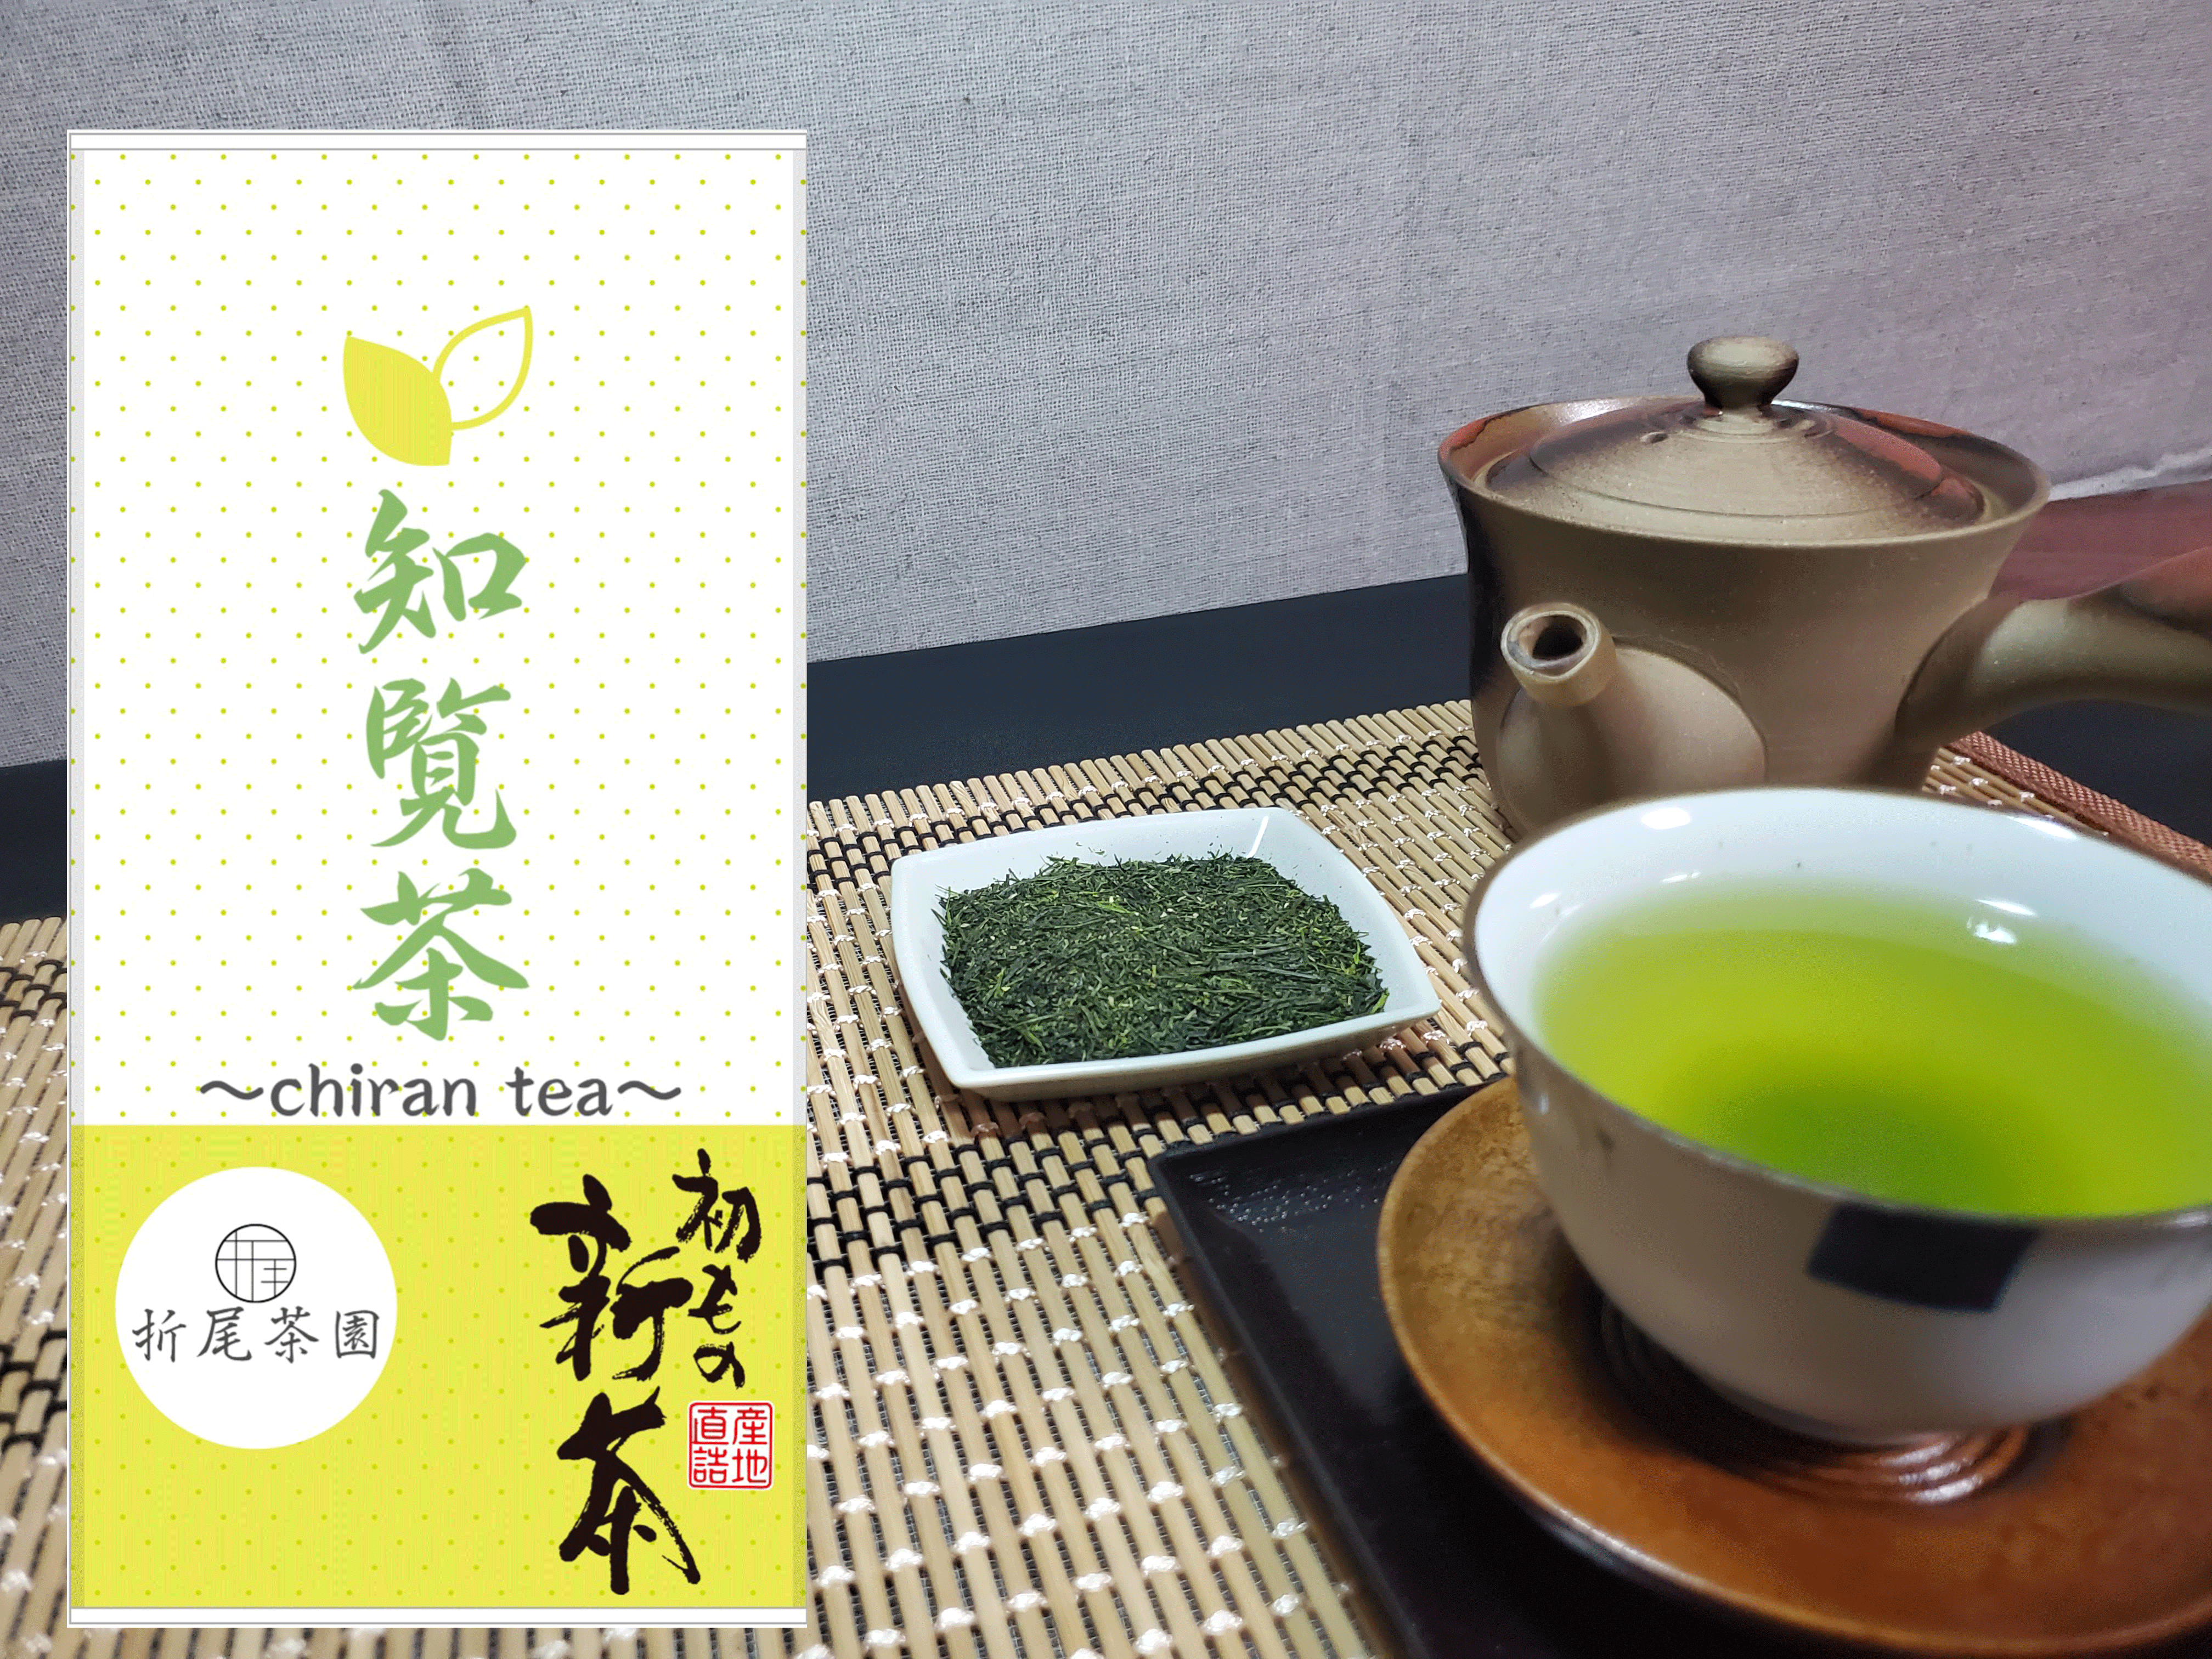 お茶 日本茶 煎茶 知覧茶 200g×3袋セット 送料無料 - 緑茶、日本茶